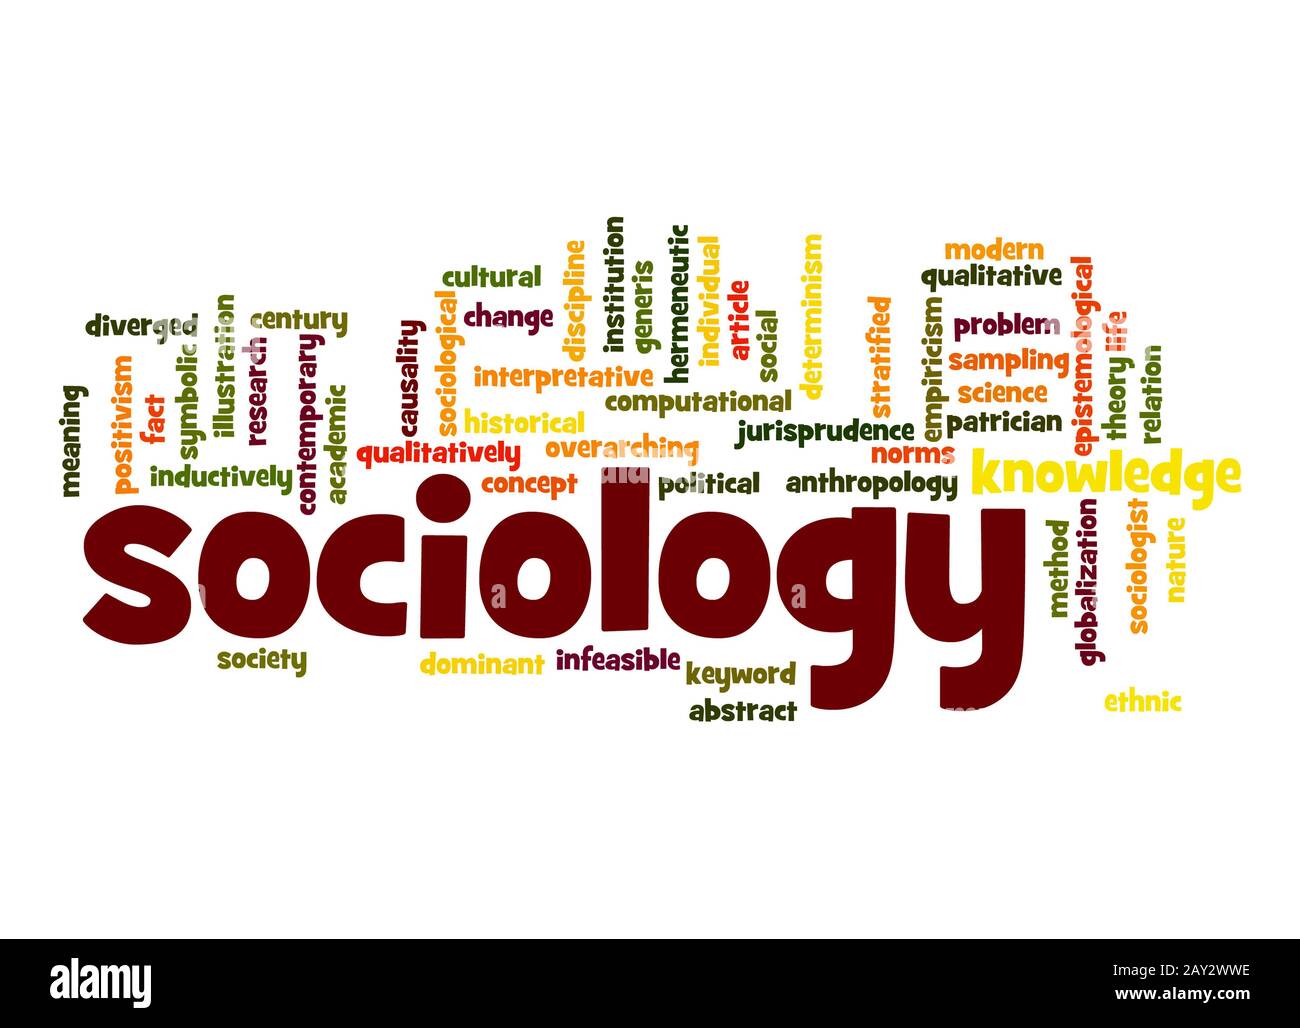 Sociology word cloud Stock Photo